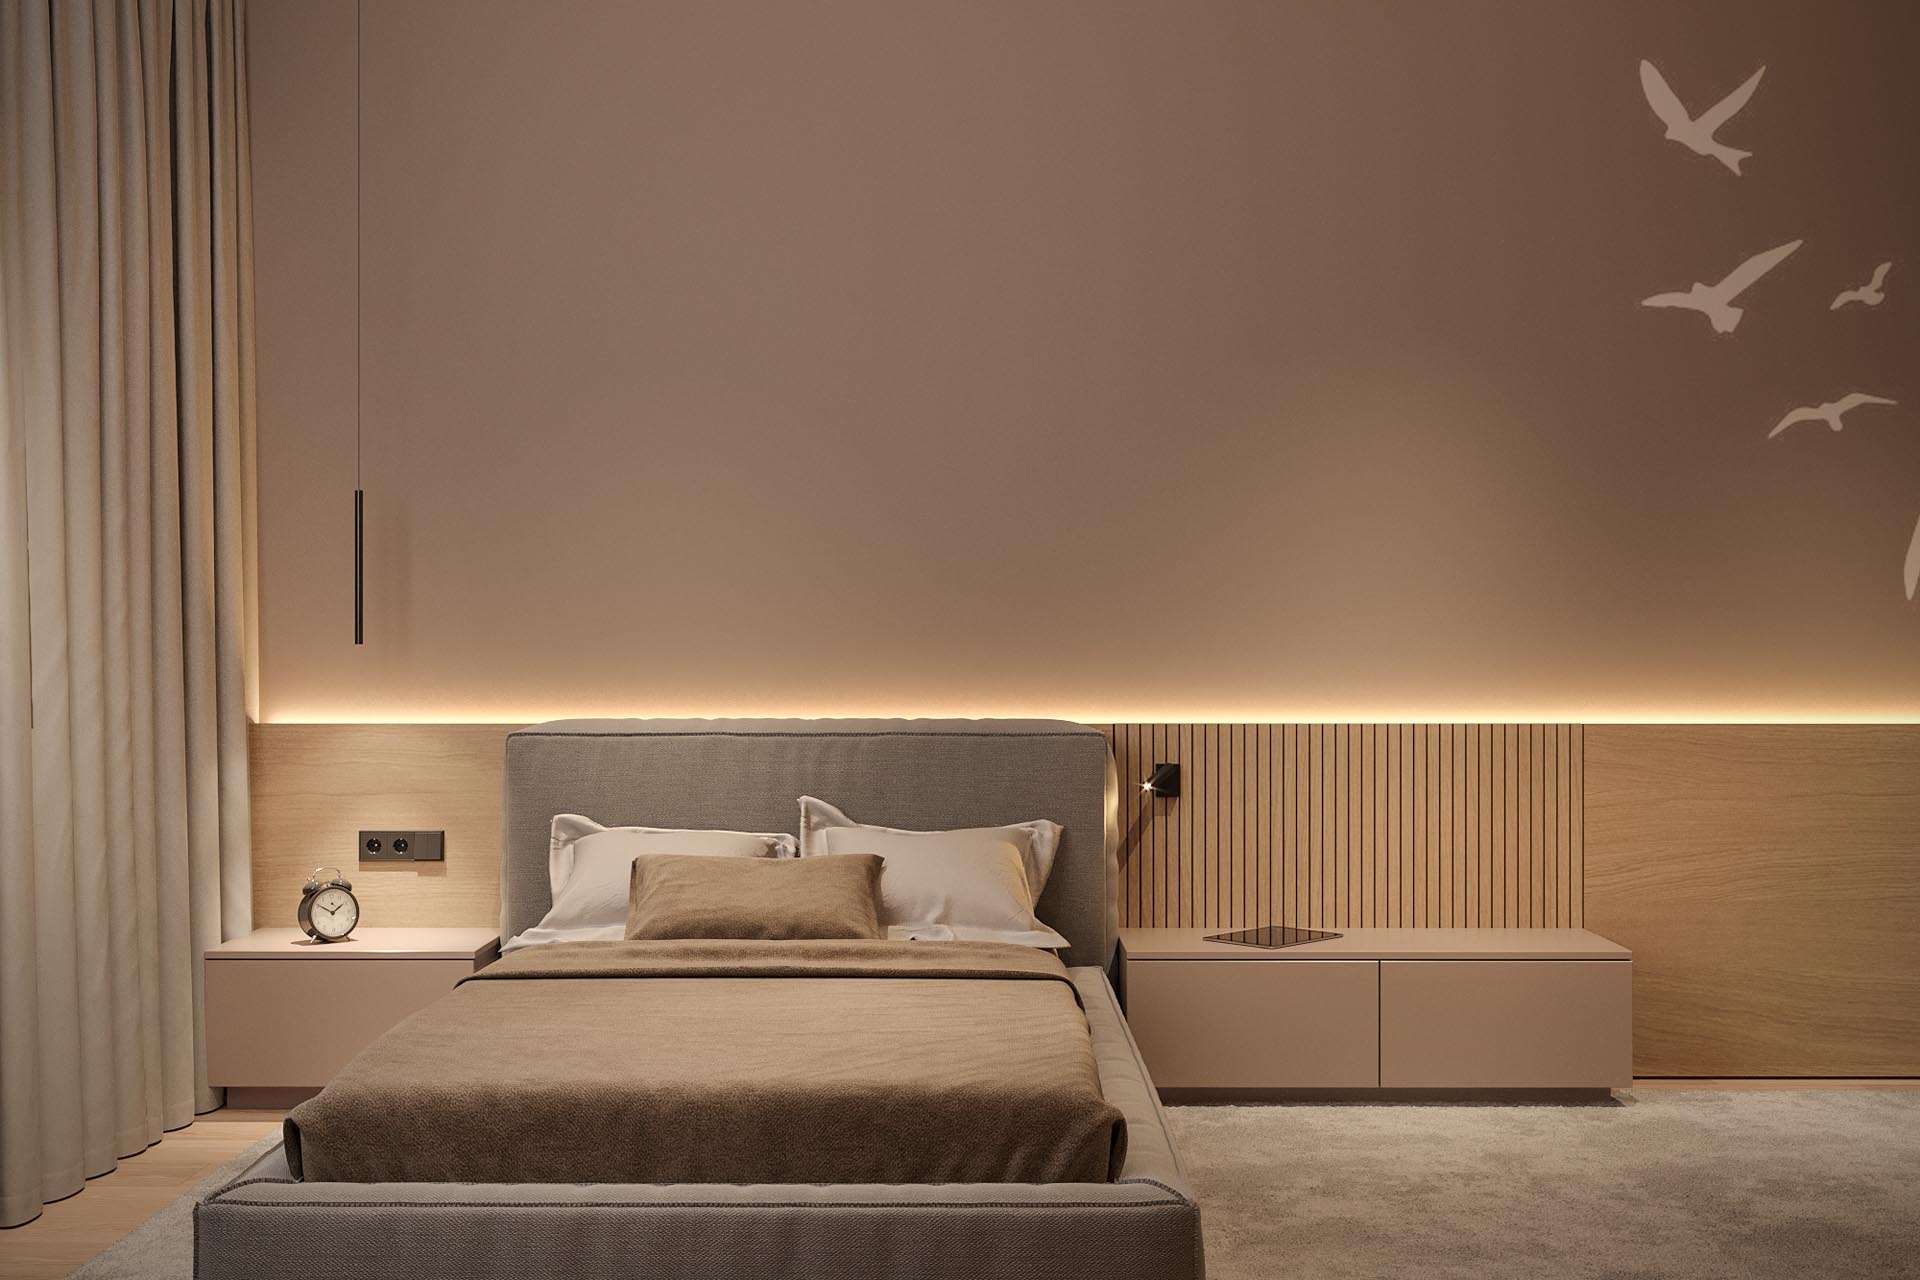 Led Lighting In Bedrooms, Led Bedroom Lights Ideas